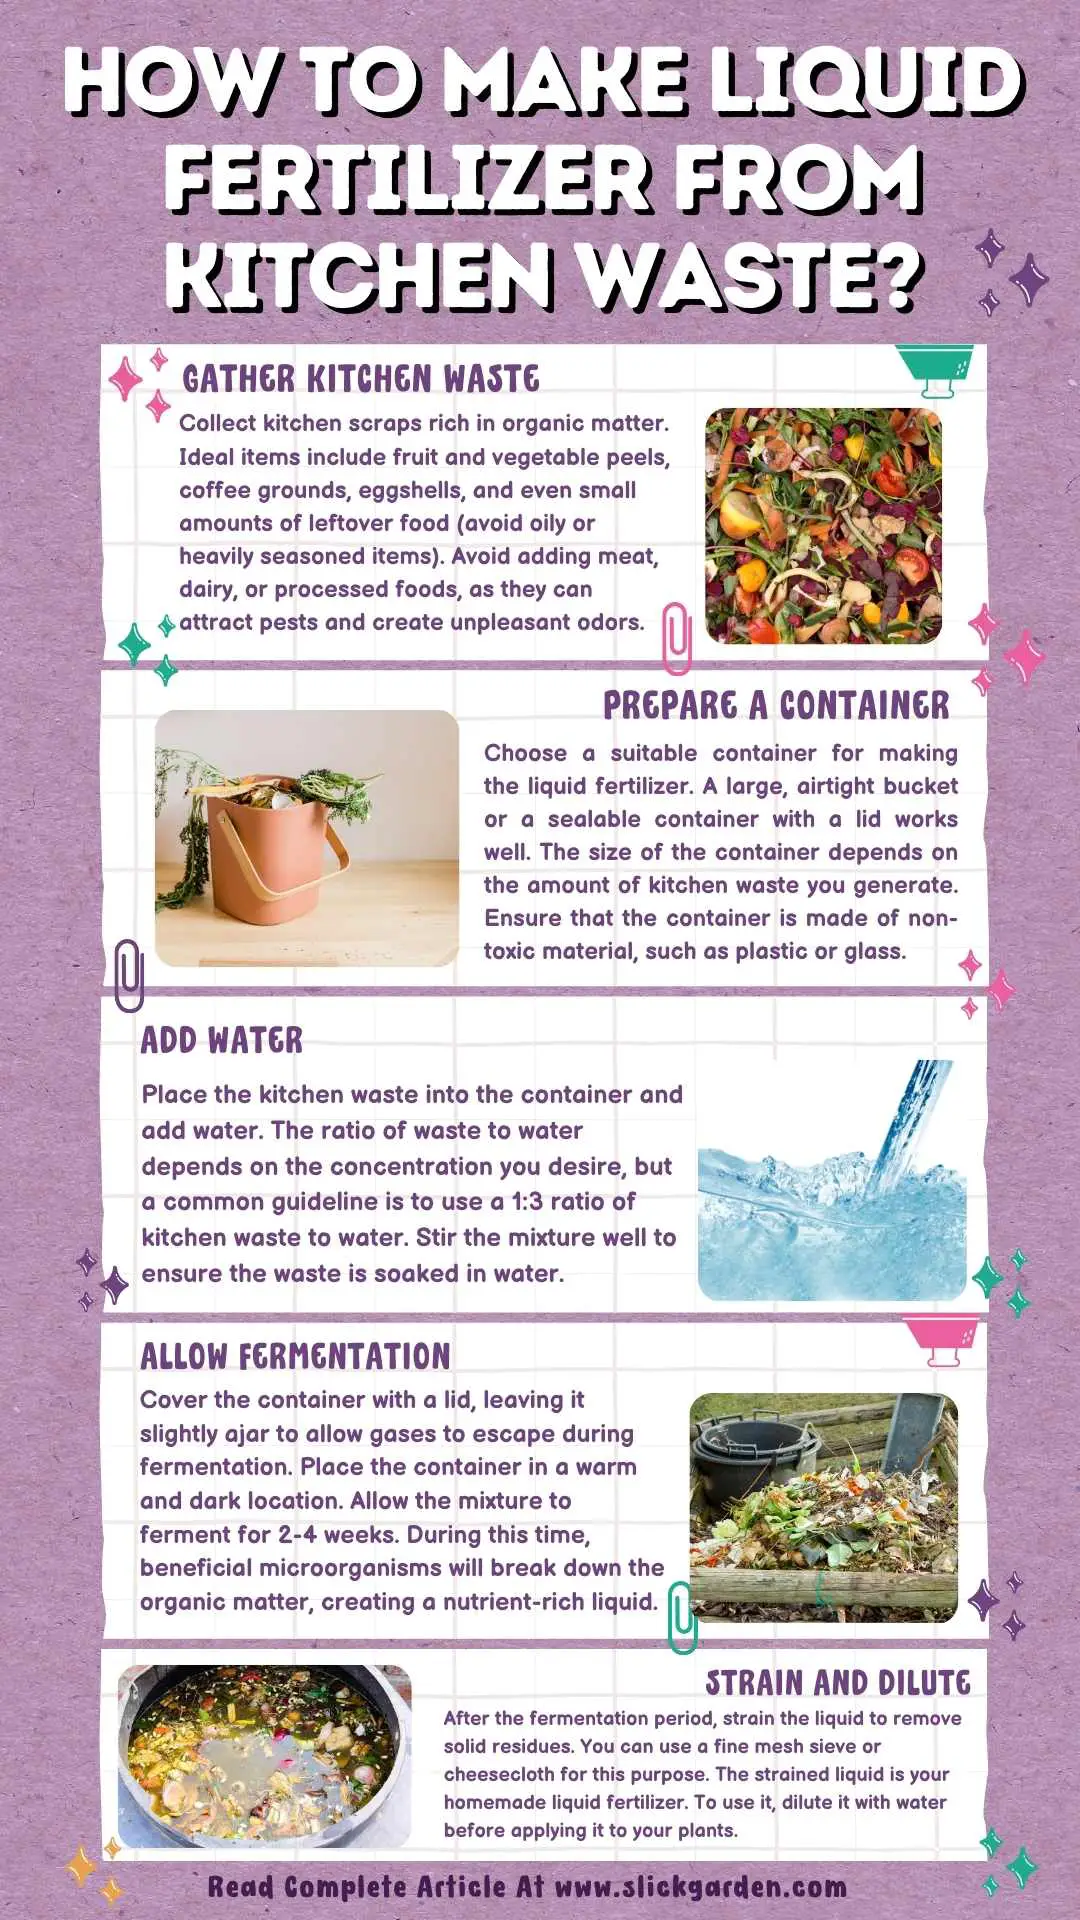 How To Make Liquid Fertilizer From Kitchen Waste infographic